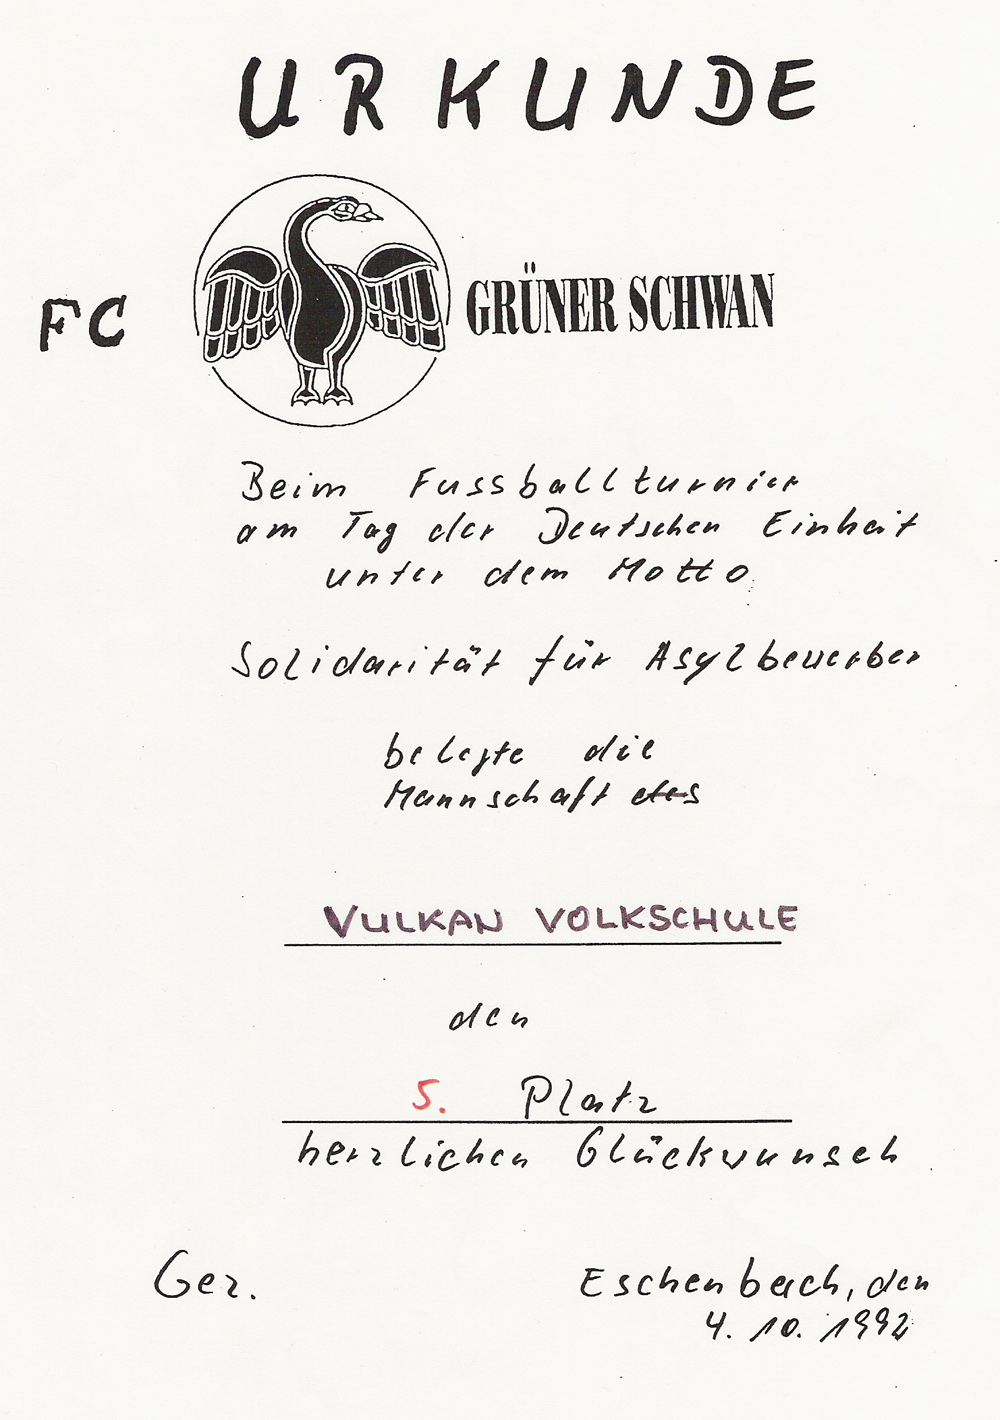 Grüner Schwan 1992